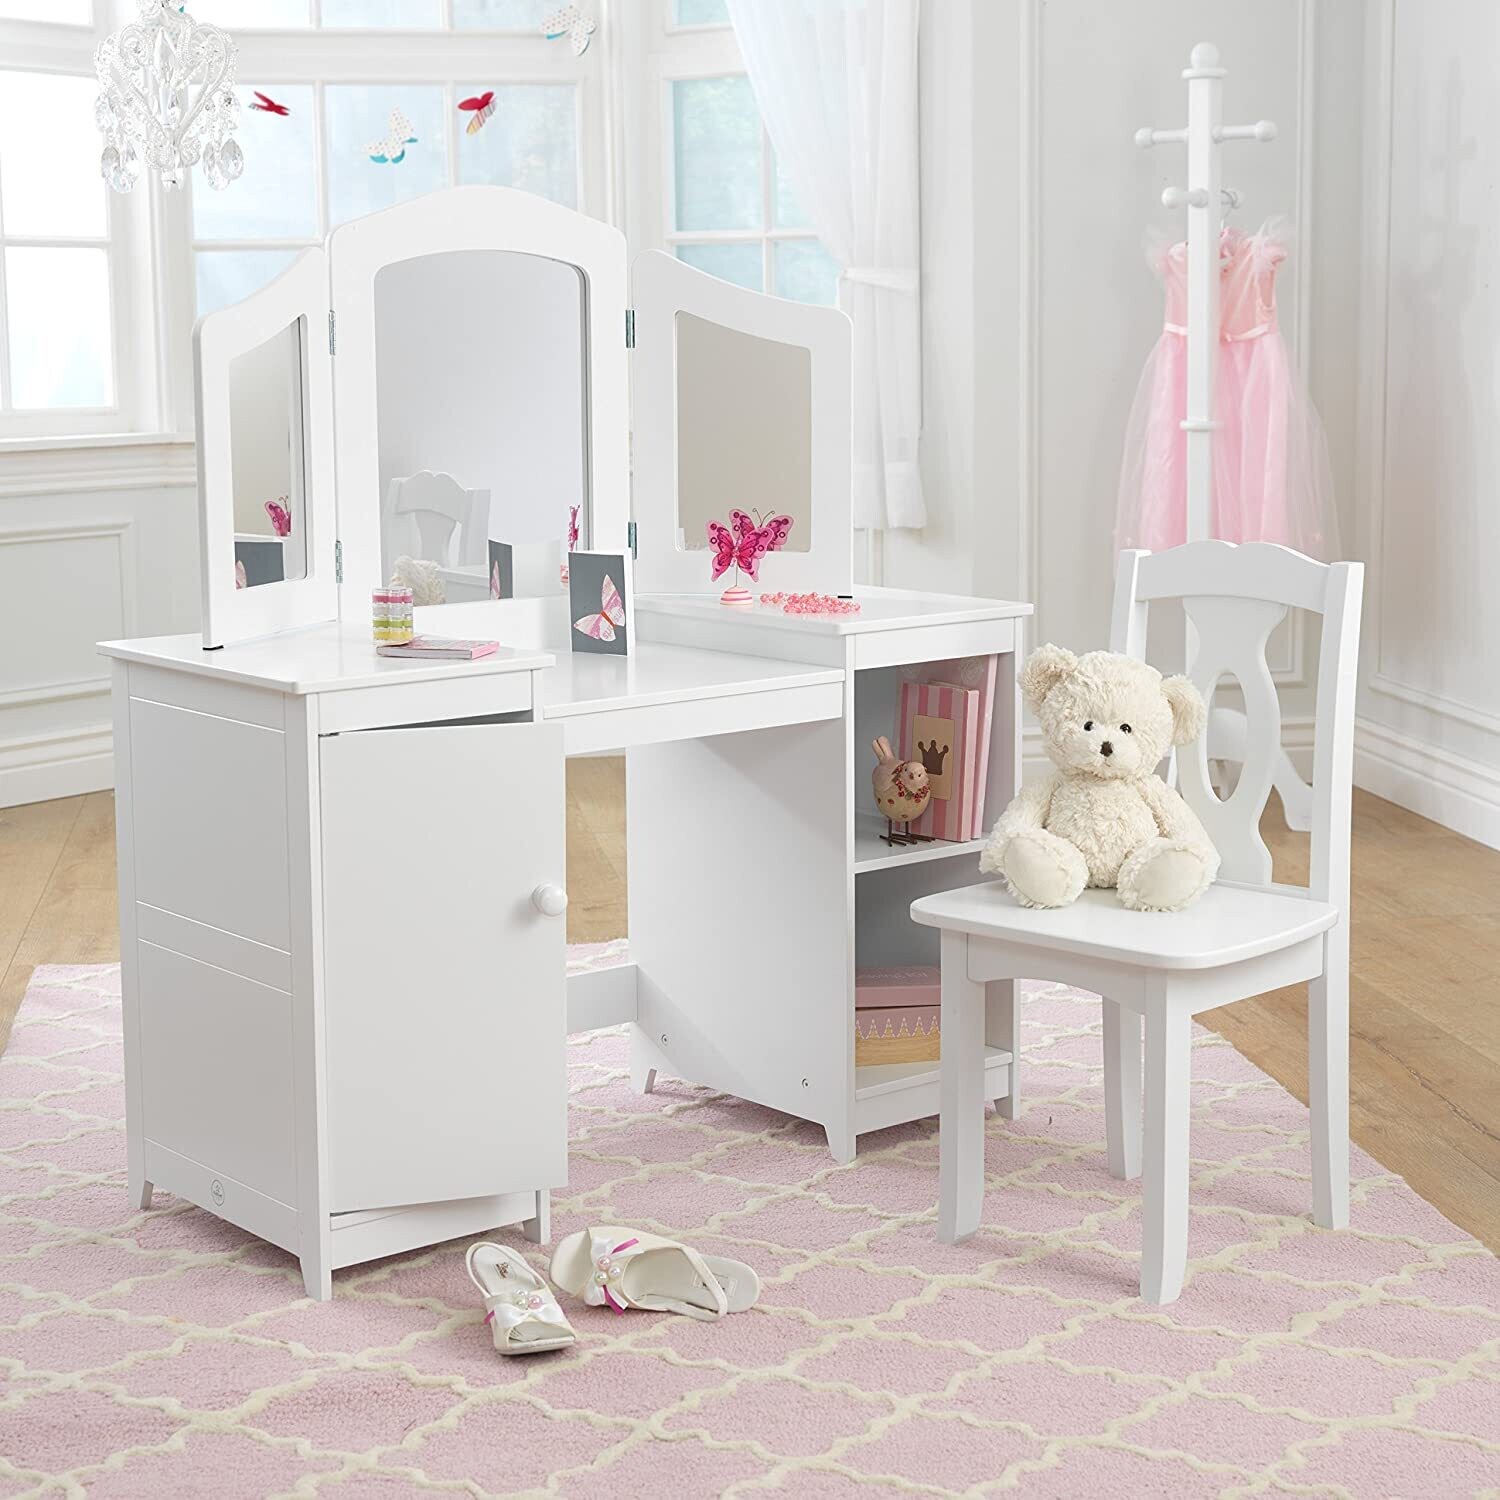 Children's Playroom/Bedroom Furniture